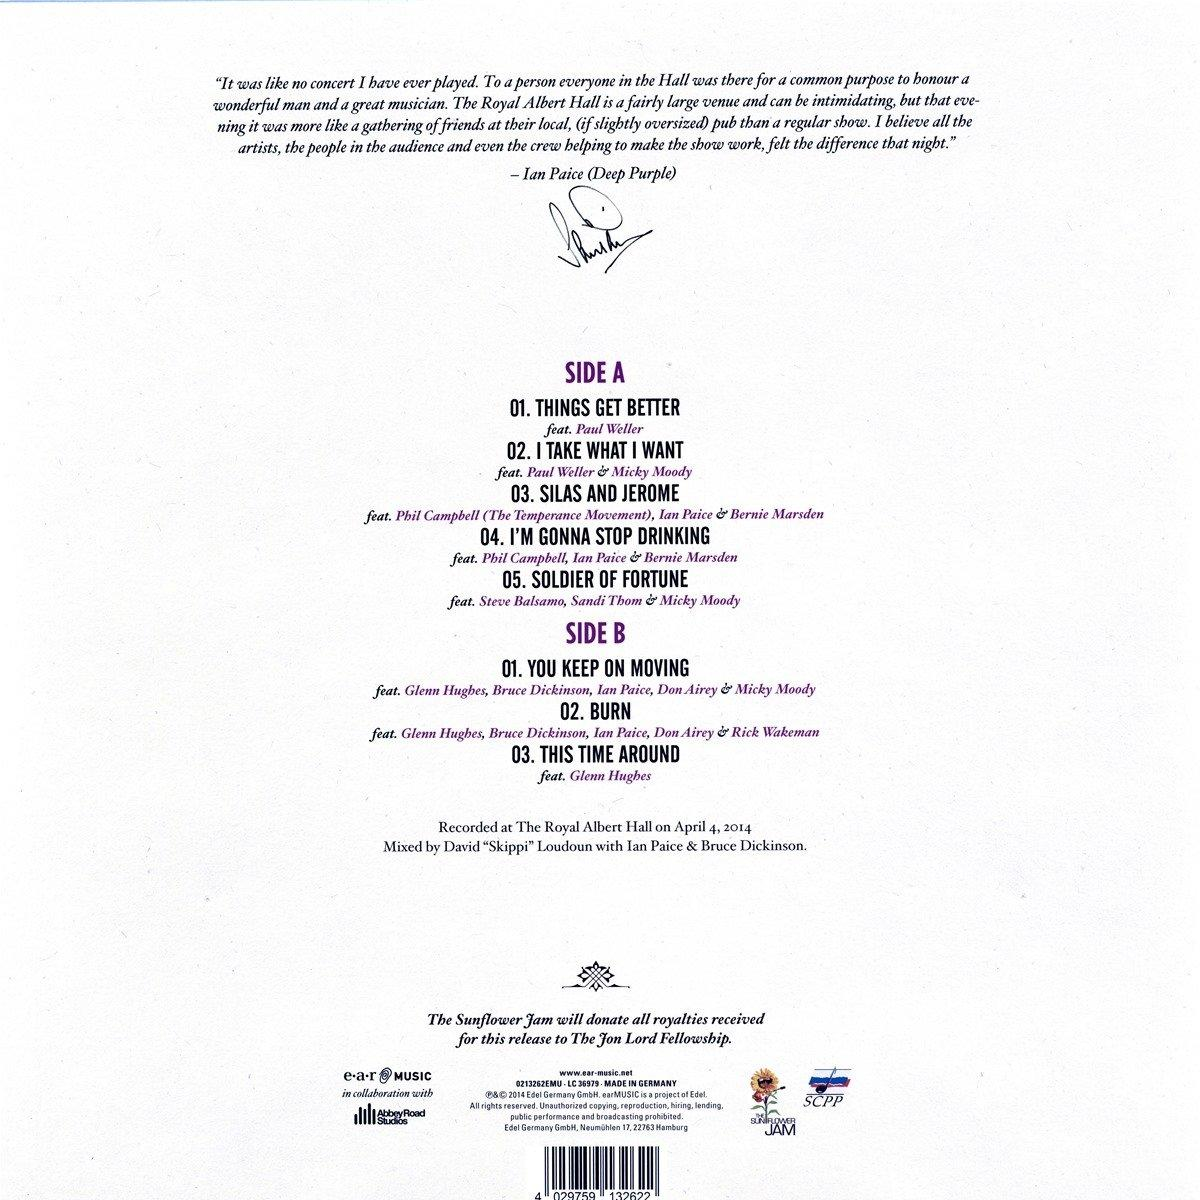 Vol.1 Legend (Vinyl) Lord-The Jon Rock - Celebrating - VARIOUS